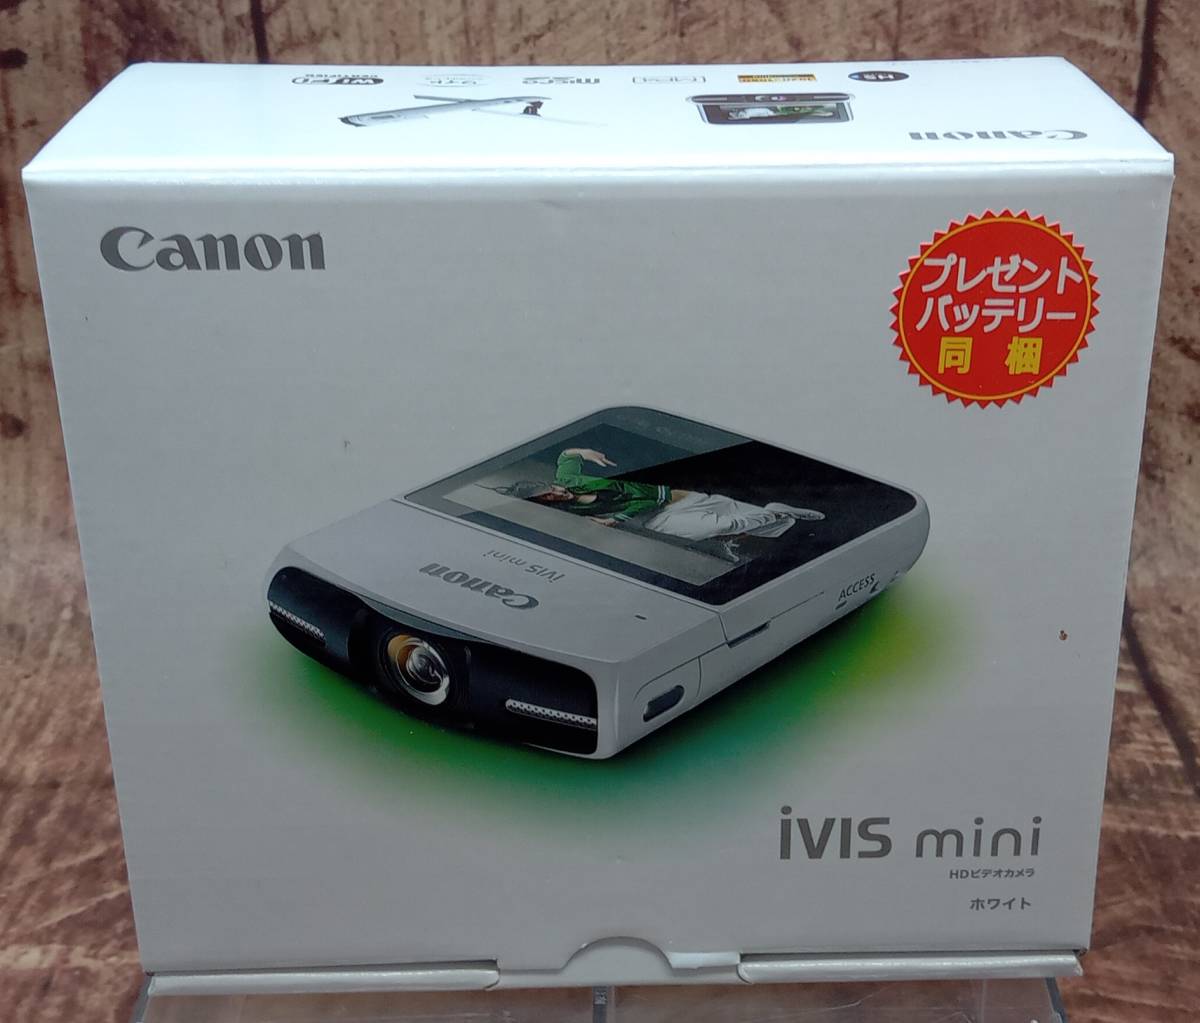 Canon キャノン /iVIS mini iVIS mini HD /8455B002 (ホワイト) /ウェアラブルカメラ/2013年製 /約1280万画素 /箱・説明書、付属備品有り_画像1